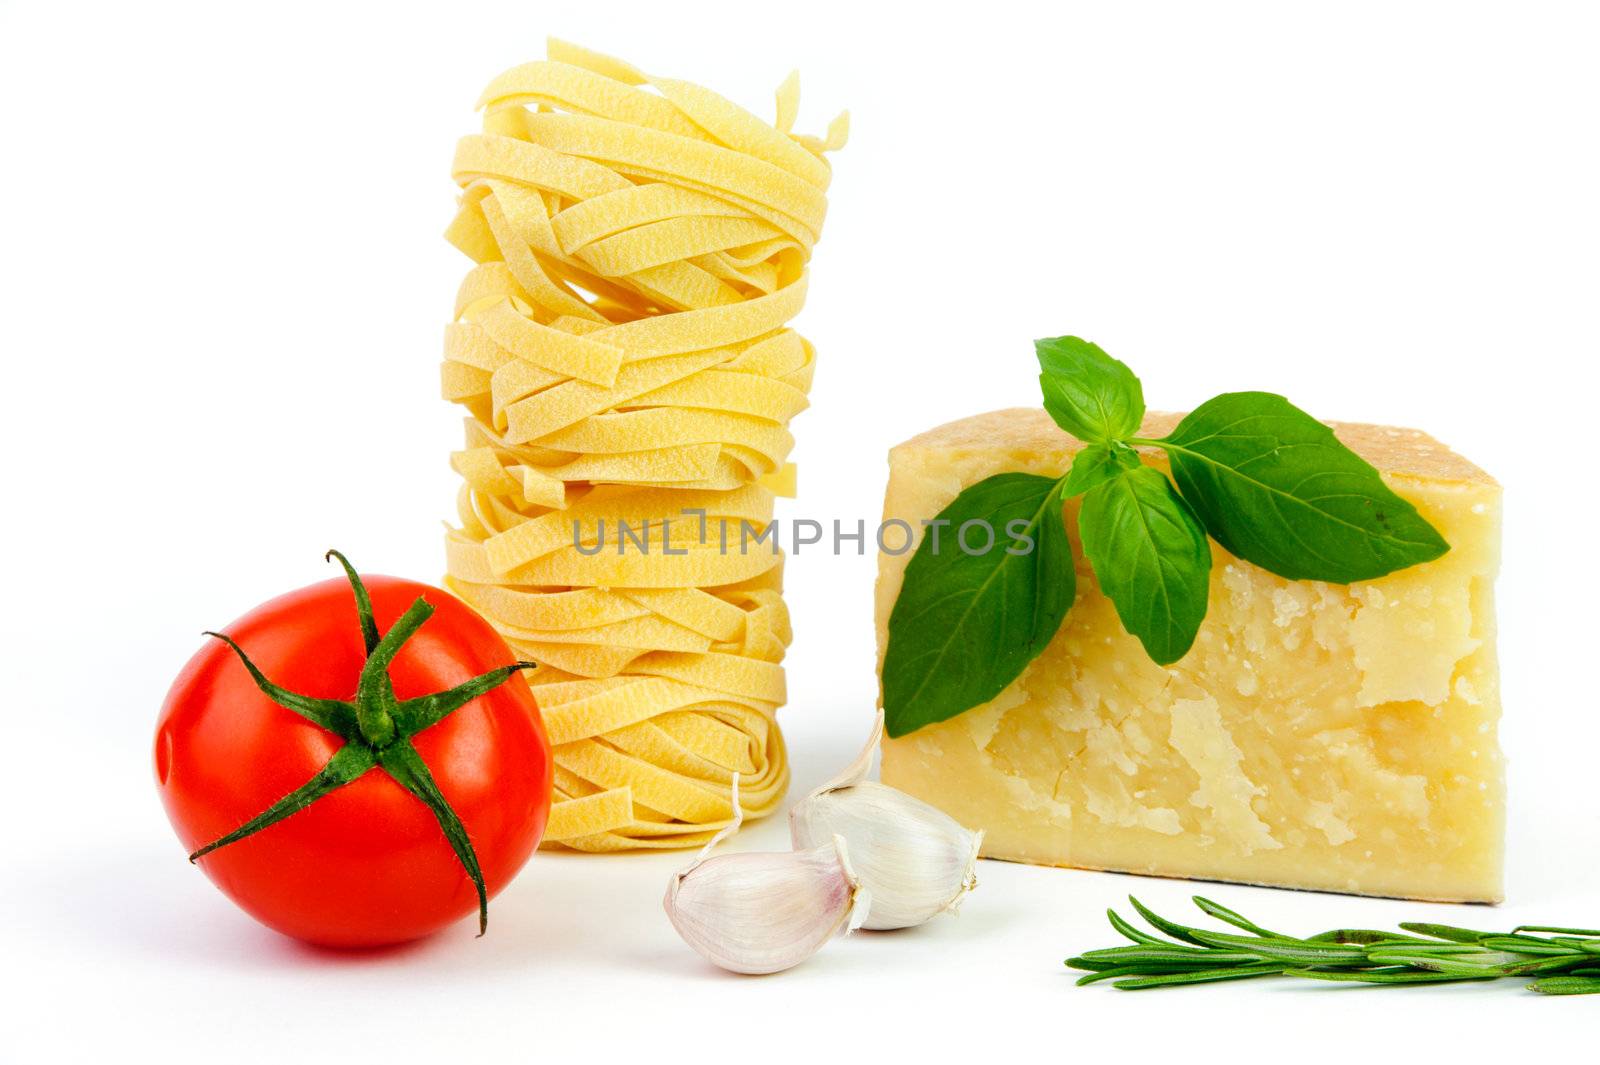 An image of cheese, tomato, pasta, garlic and basil